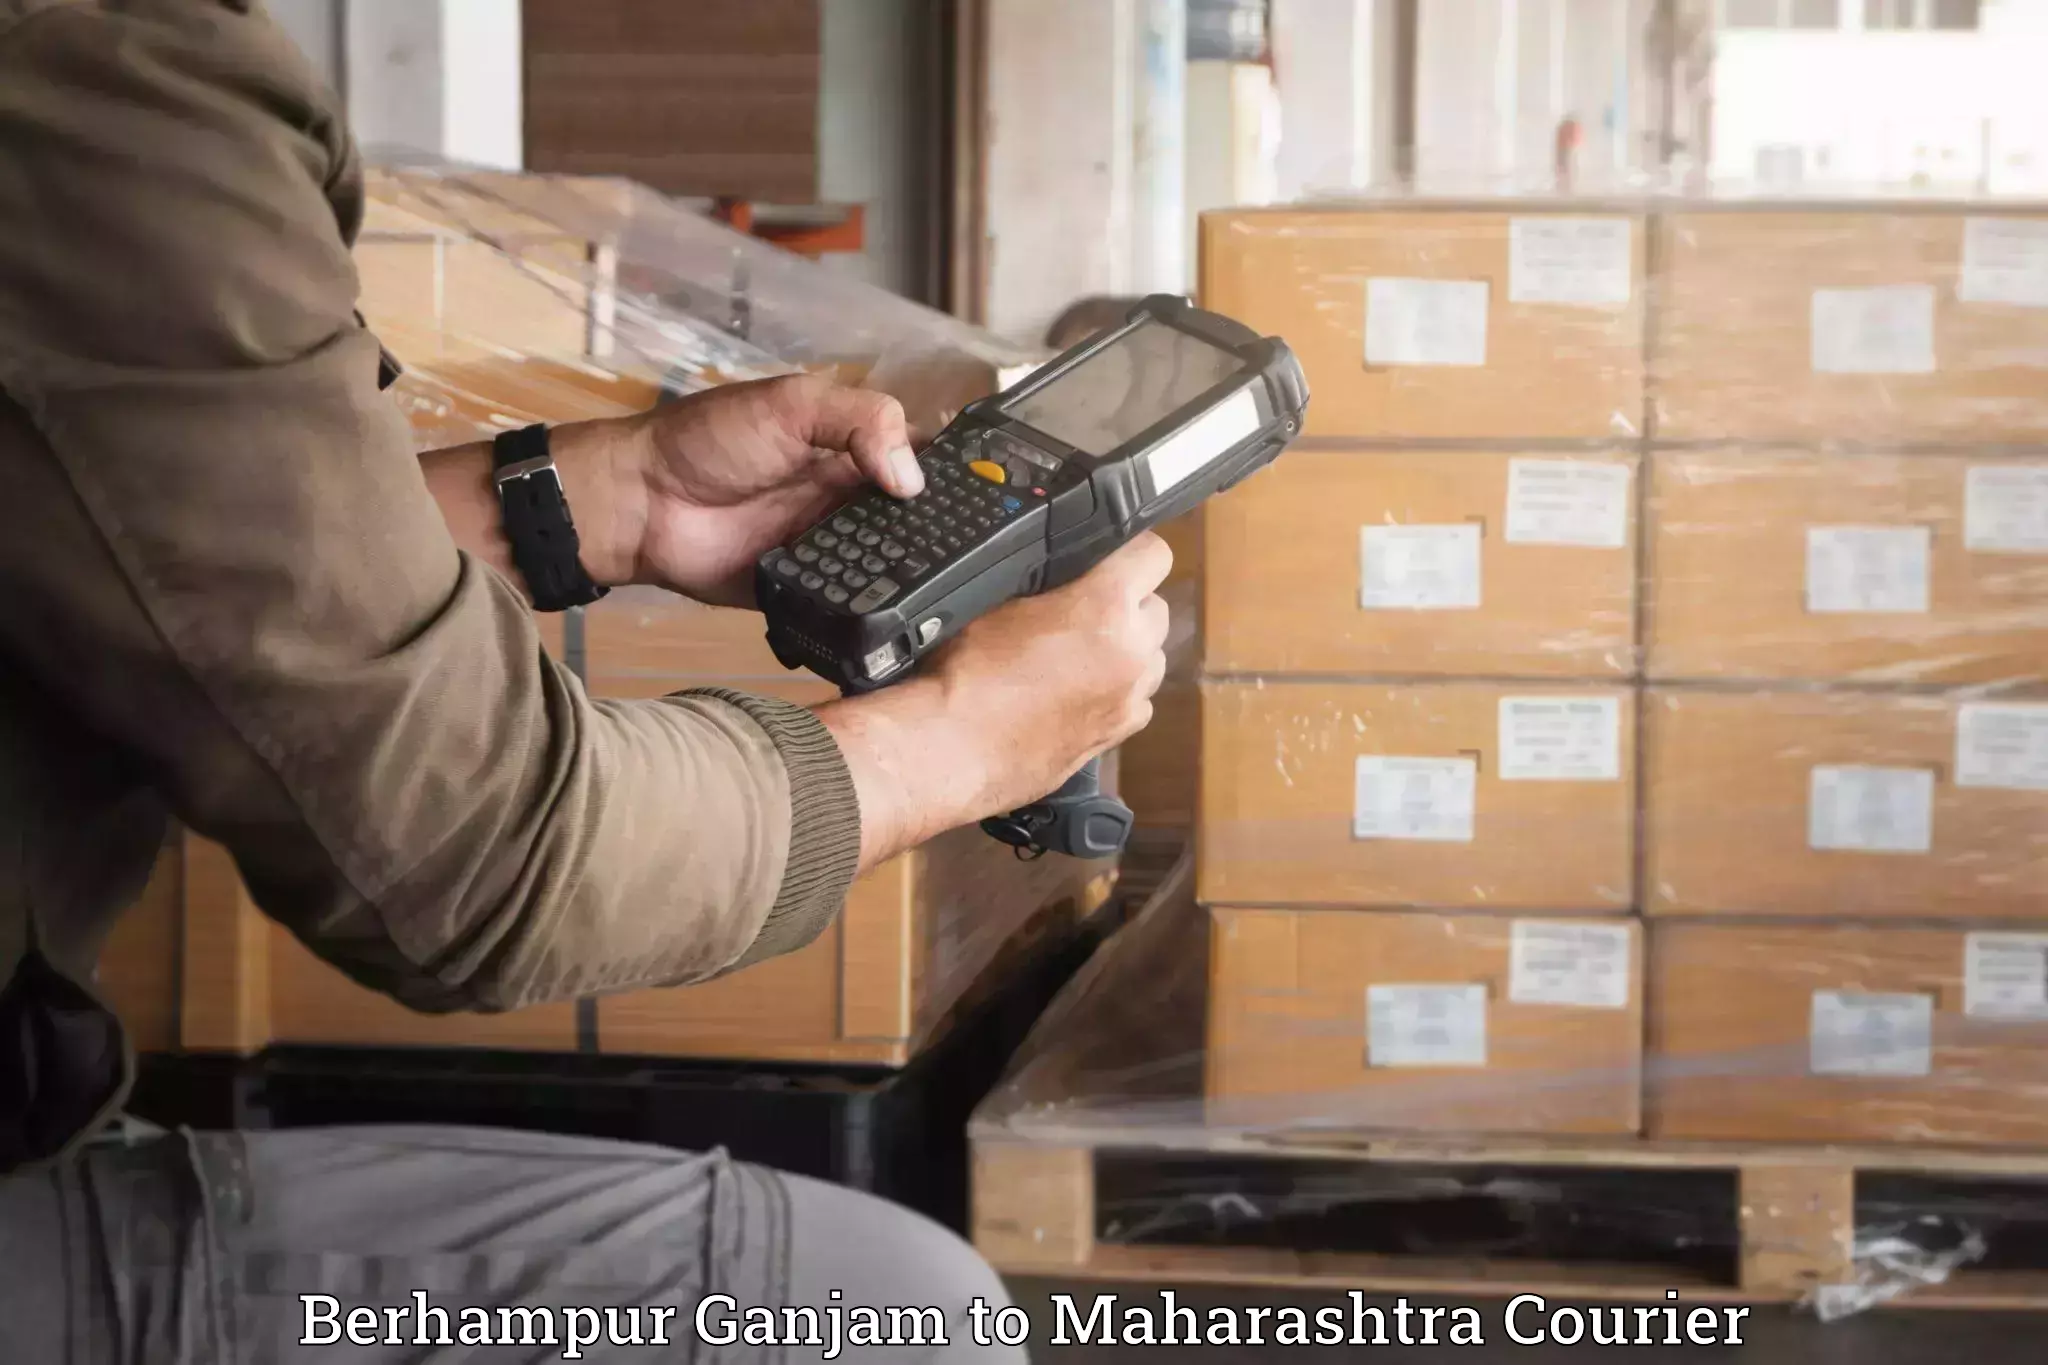 Furniture relocation experts Berhampur Ganjam to Oras